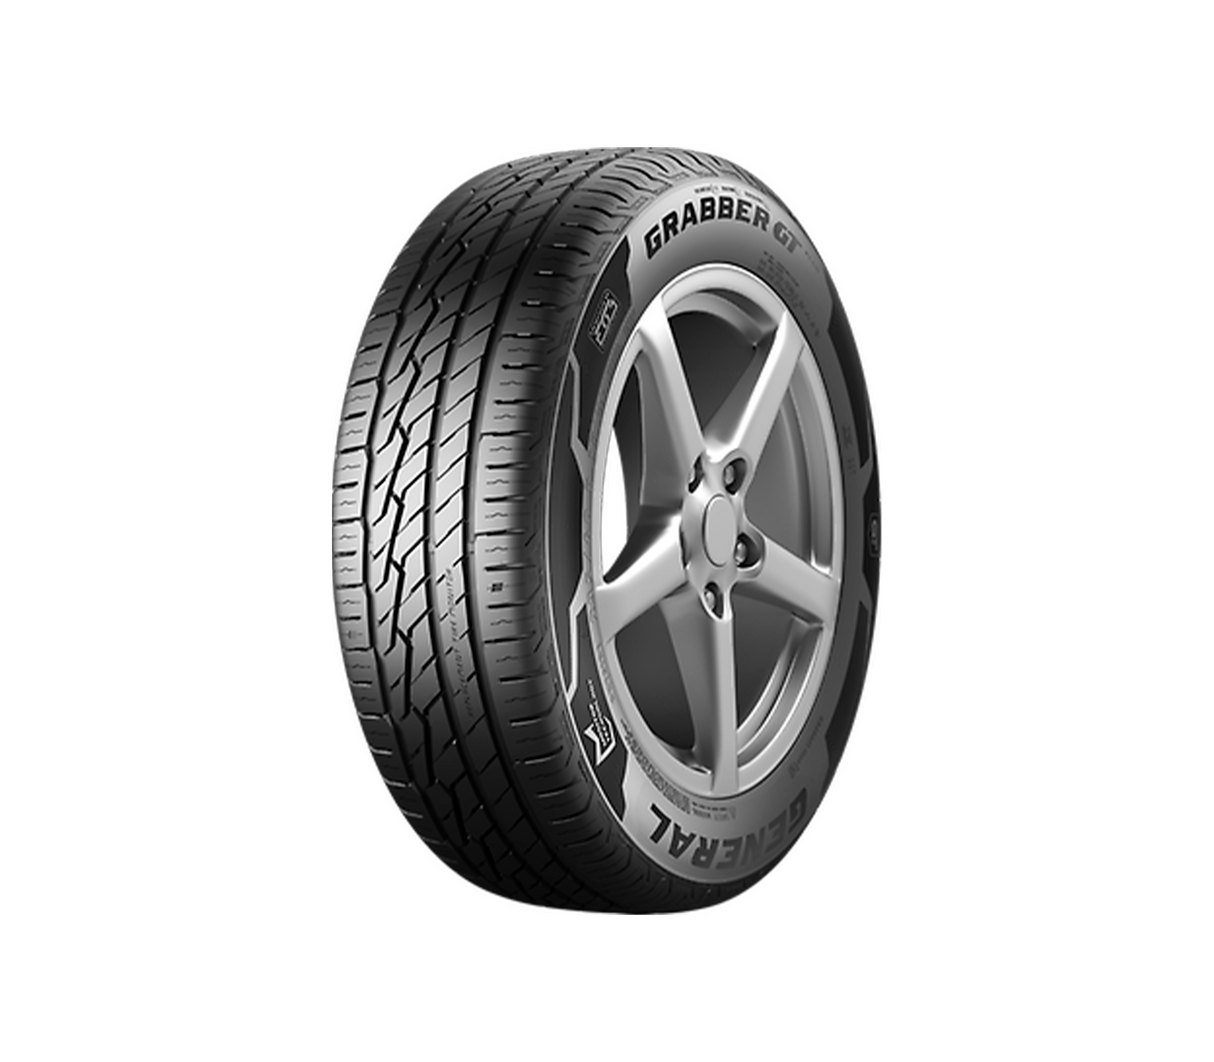 Neumático 225/60R17 99H Grabber Gt Plus General Tires